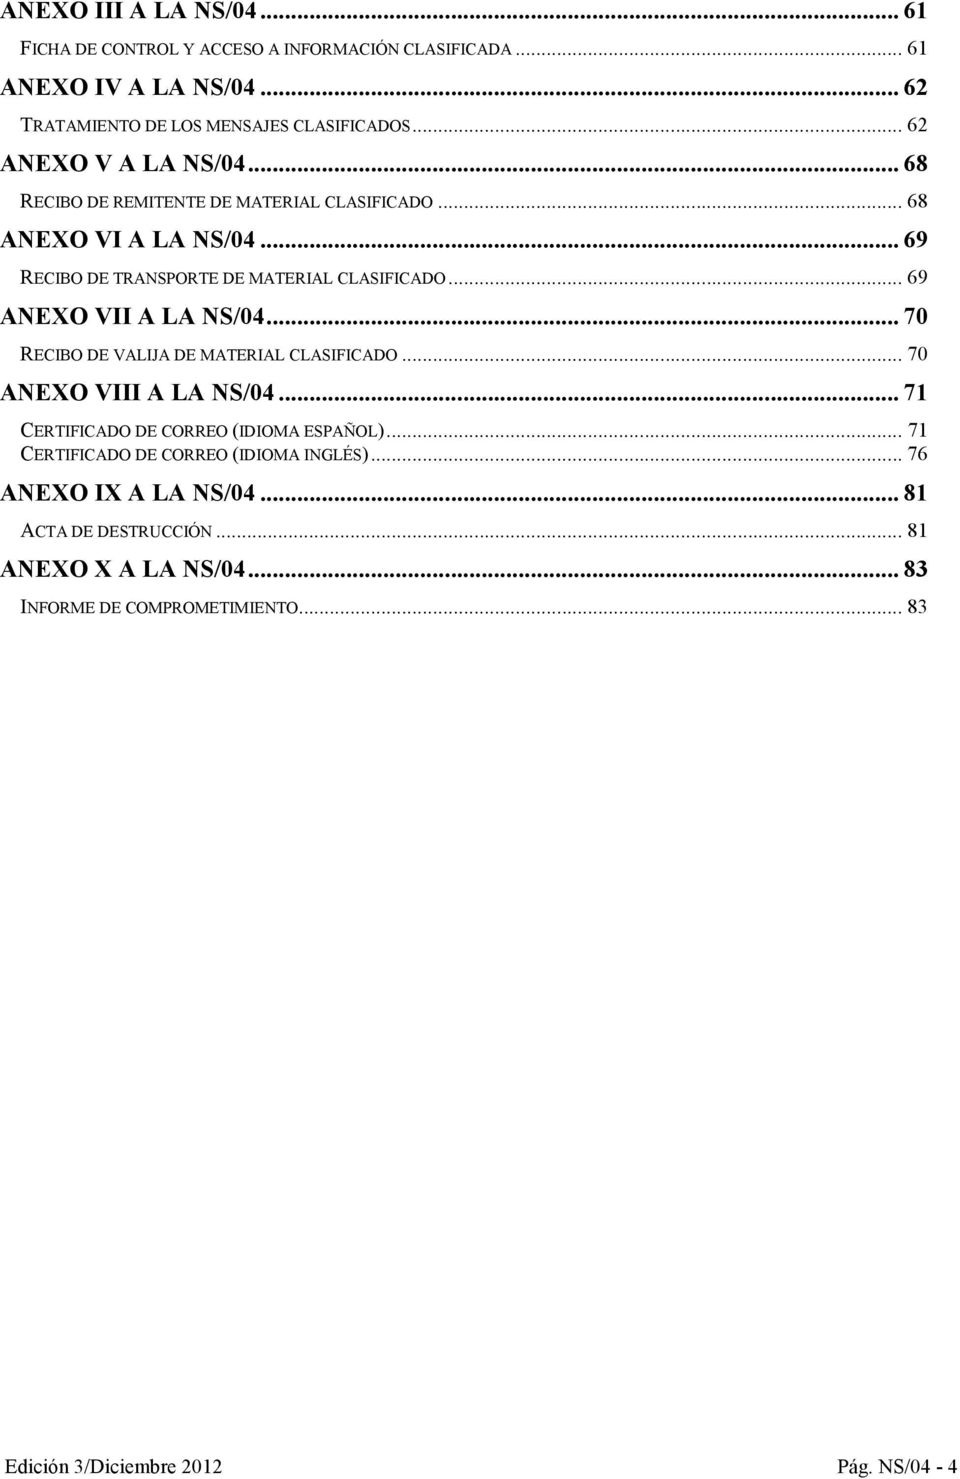 .. 69 ANEXO VII A LA NS/04... 70 RECIBO DE VALIJA DE MATERIAL CLASIFICADO... 70 ANEXO VIII A LA NS/04... 71 CERTIFICADO DE CORREO (IDIOMA ESPAÑOL).